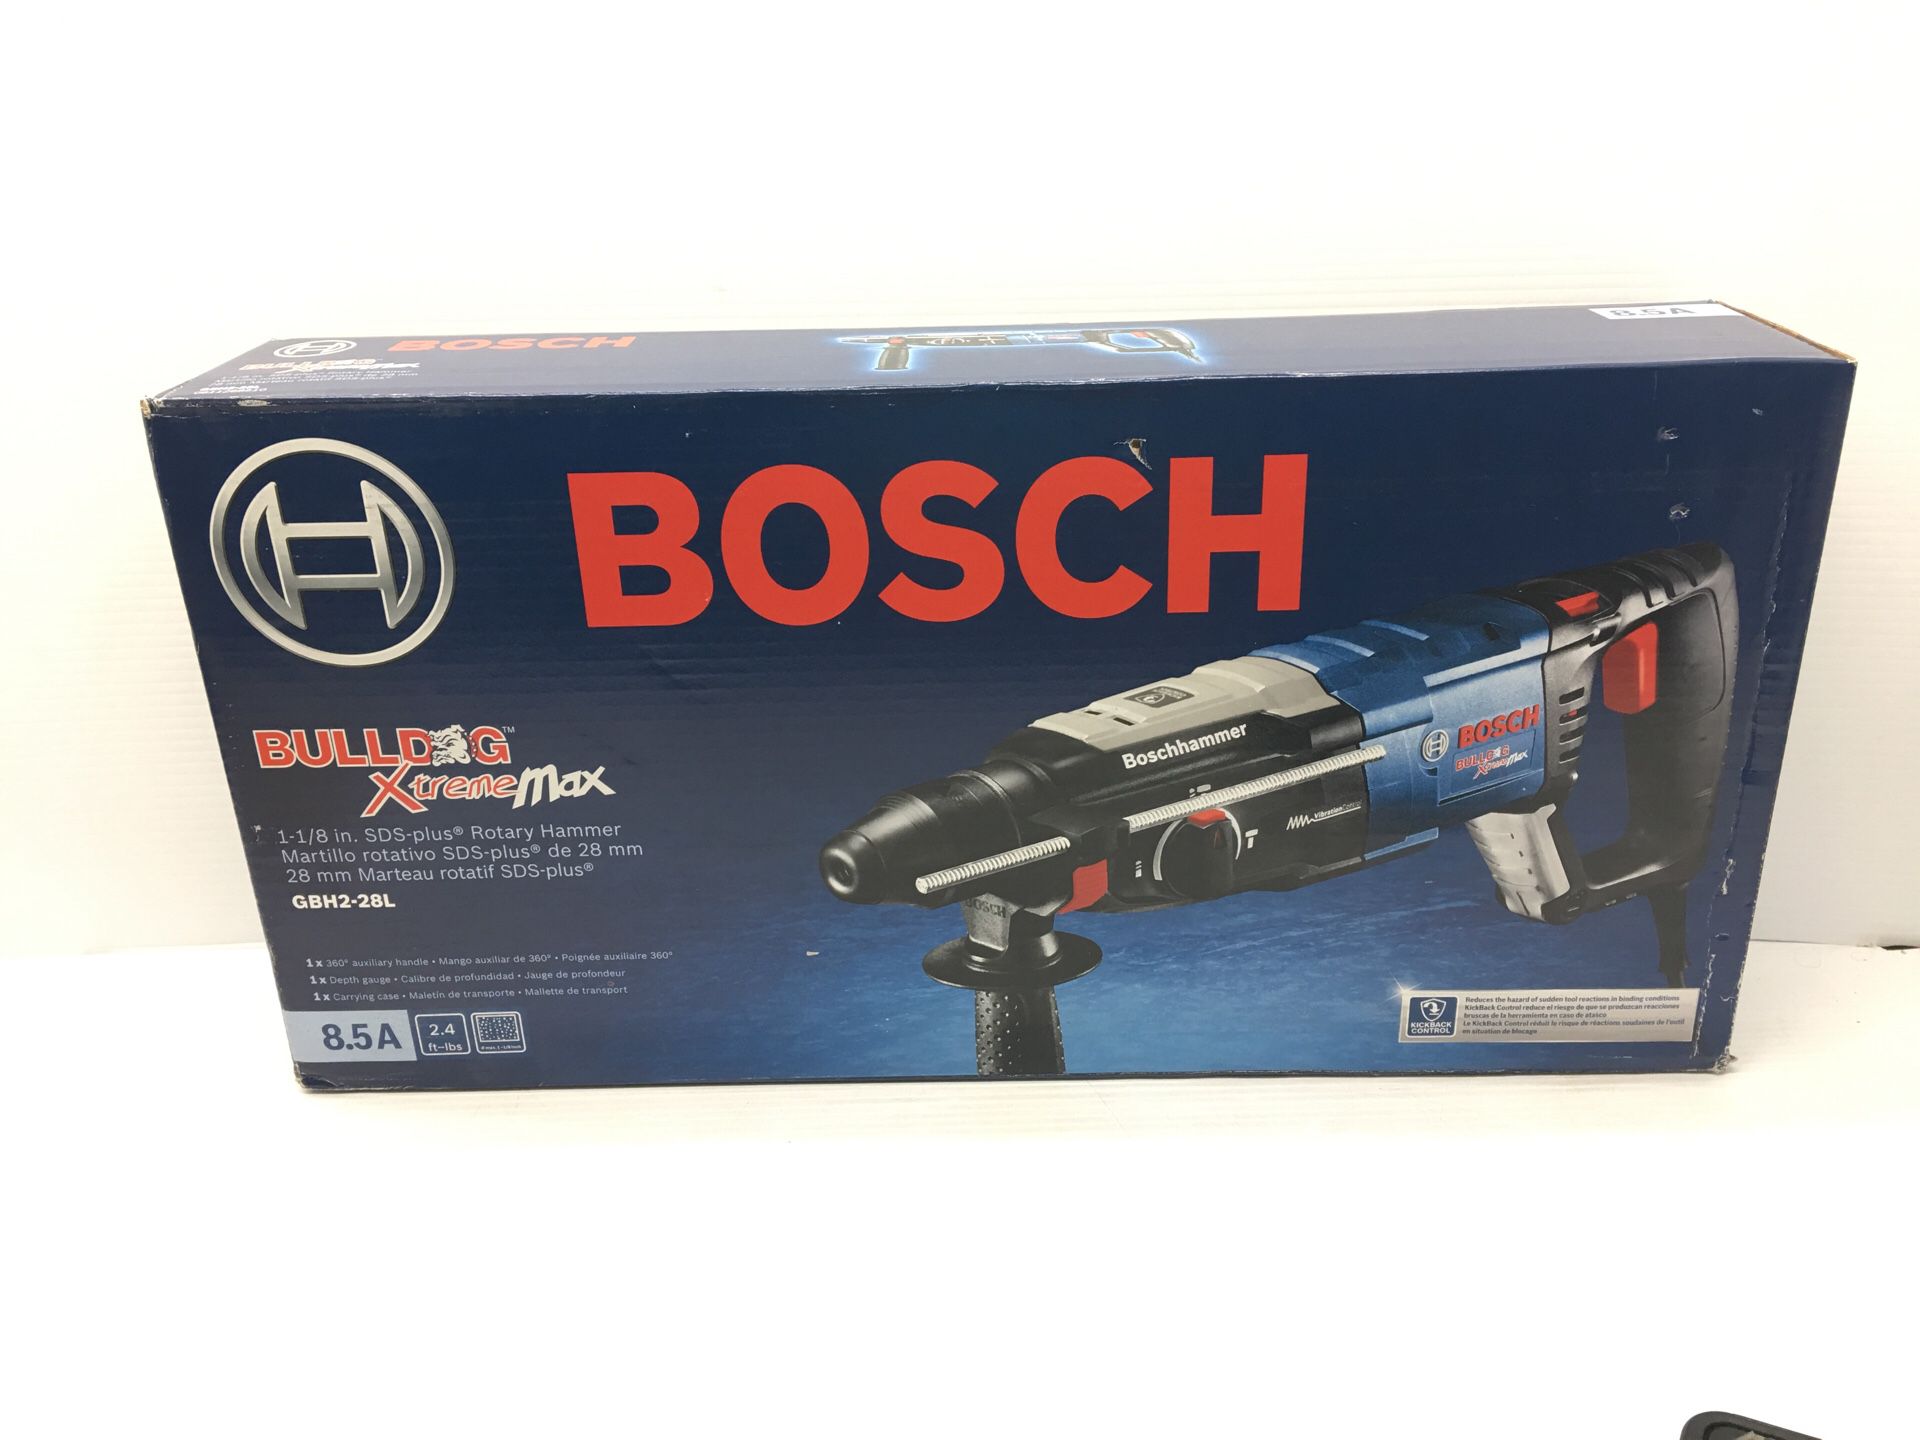 Bosch bulldog xtreme max 1-1/8 rotary hammer drill GBH2-28L